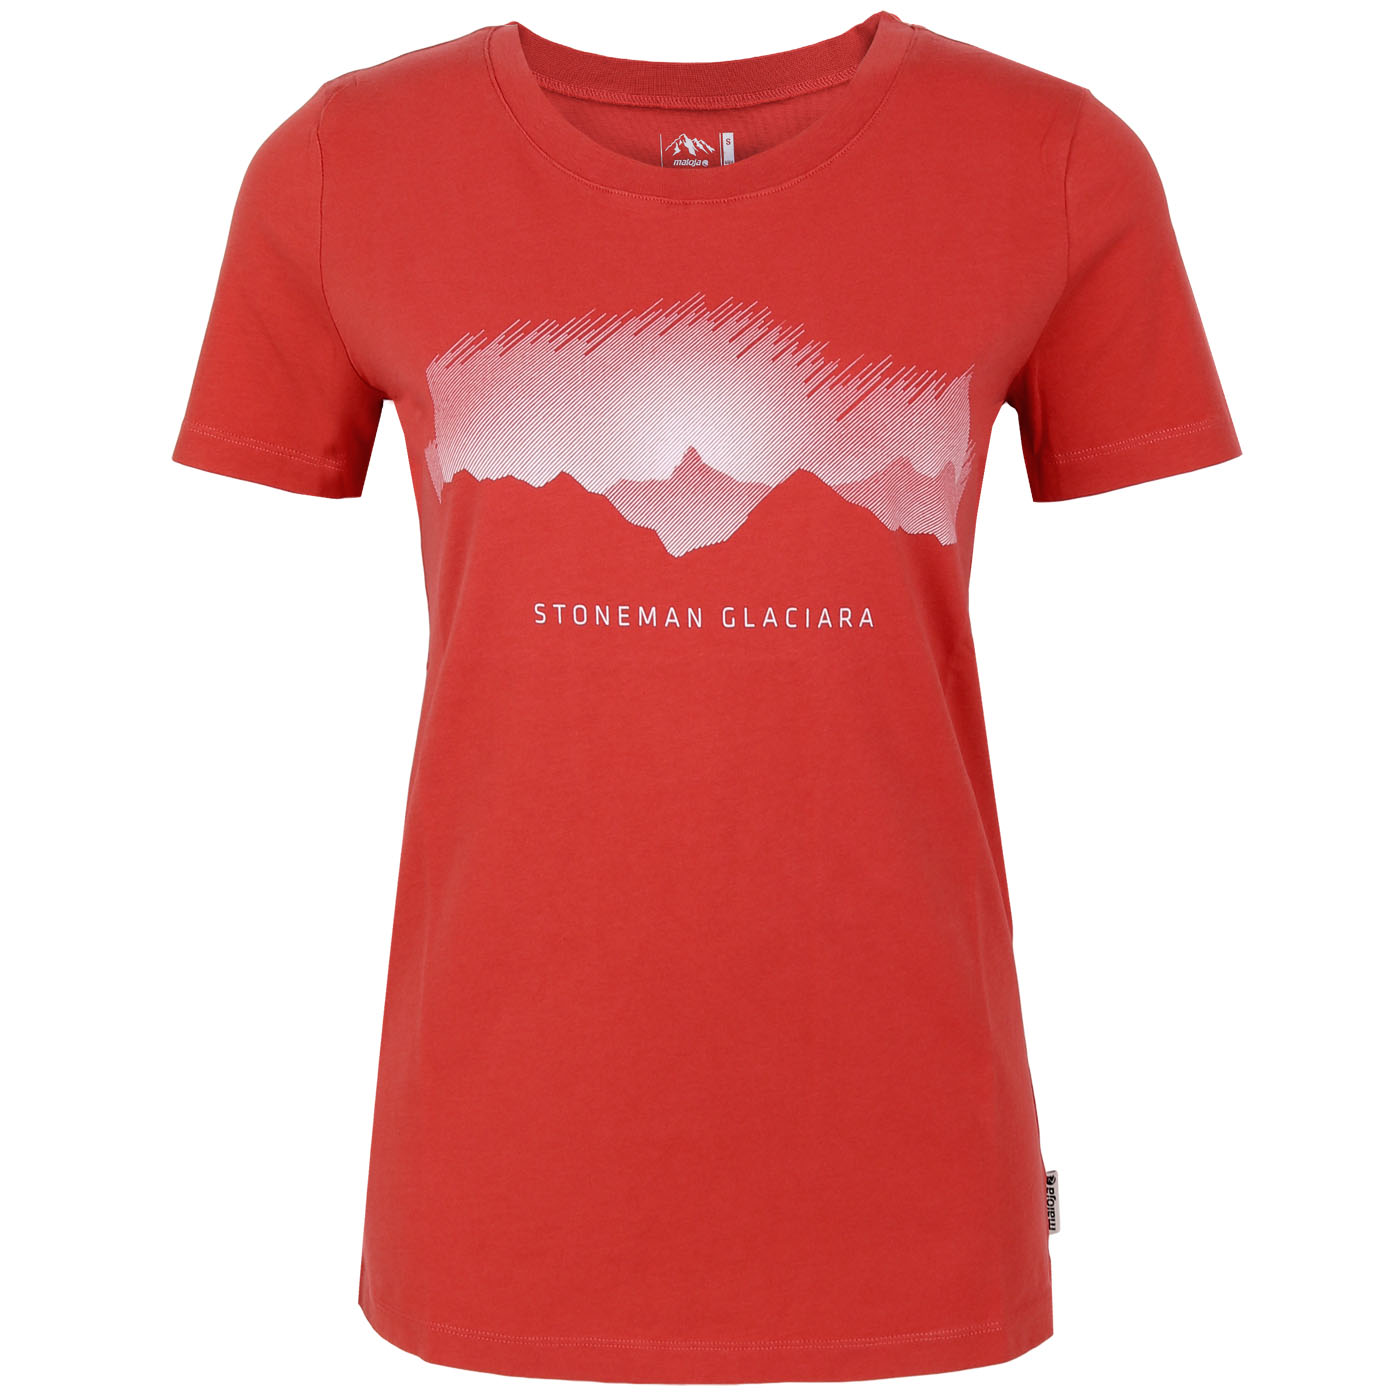 Picture of Stoneman Glaciara »Gipfelsturm« Women&#039;s T-Shirt by Maloja - vintage red